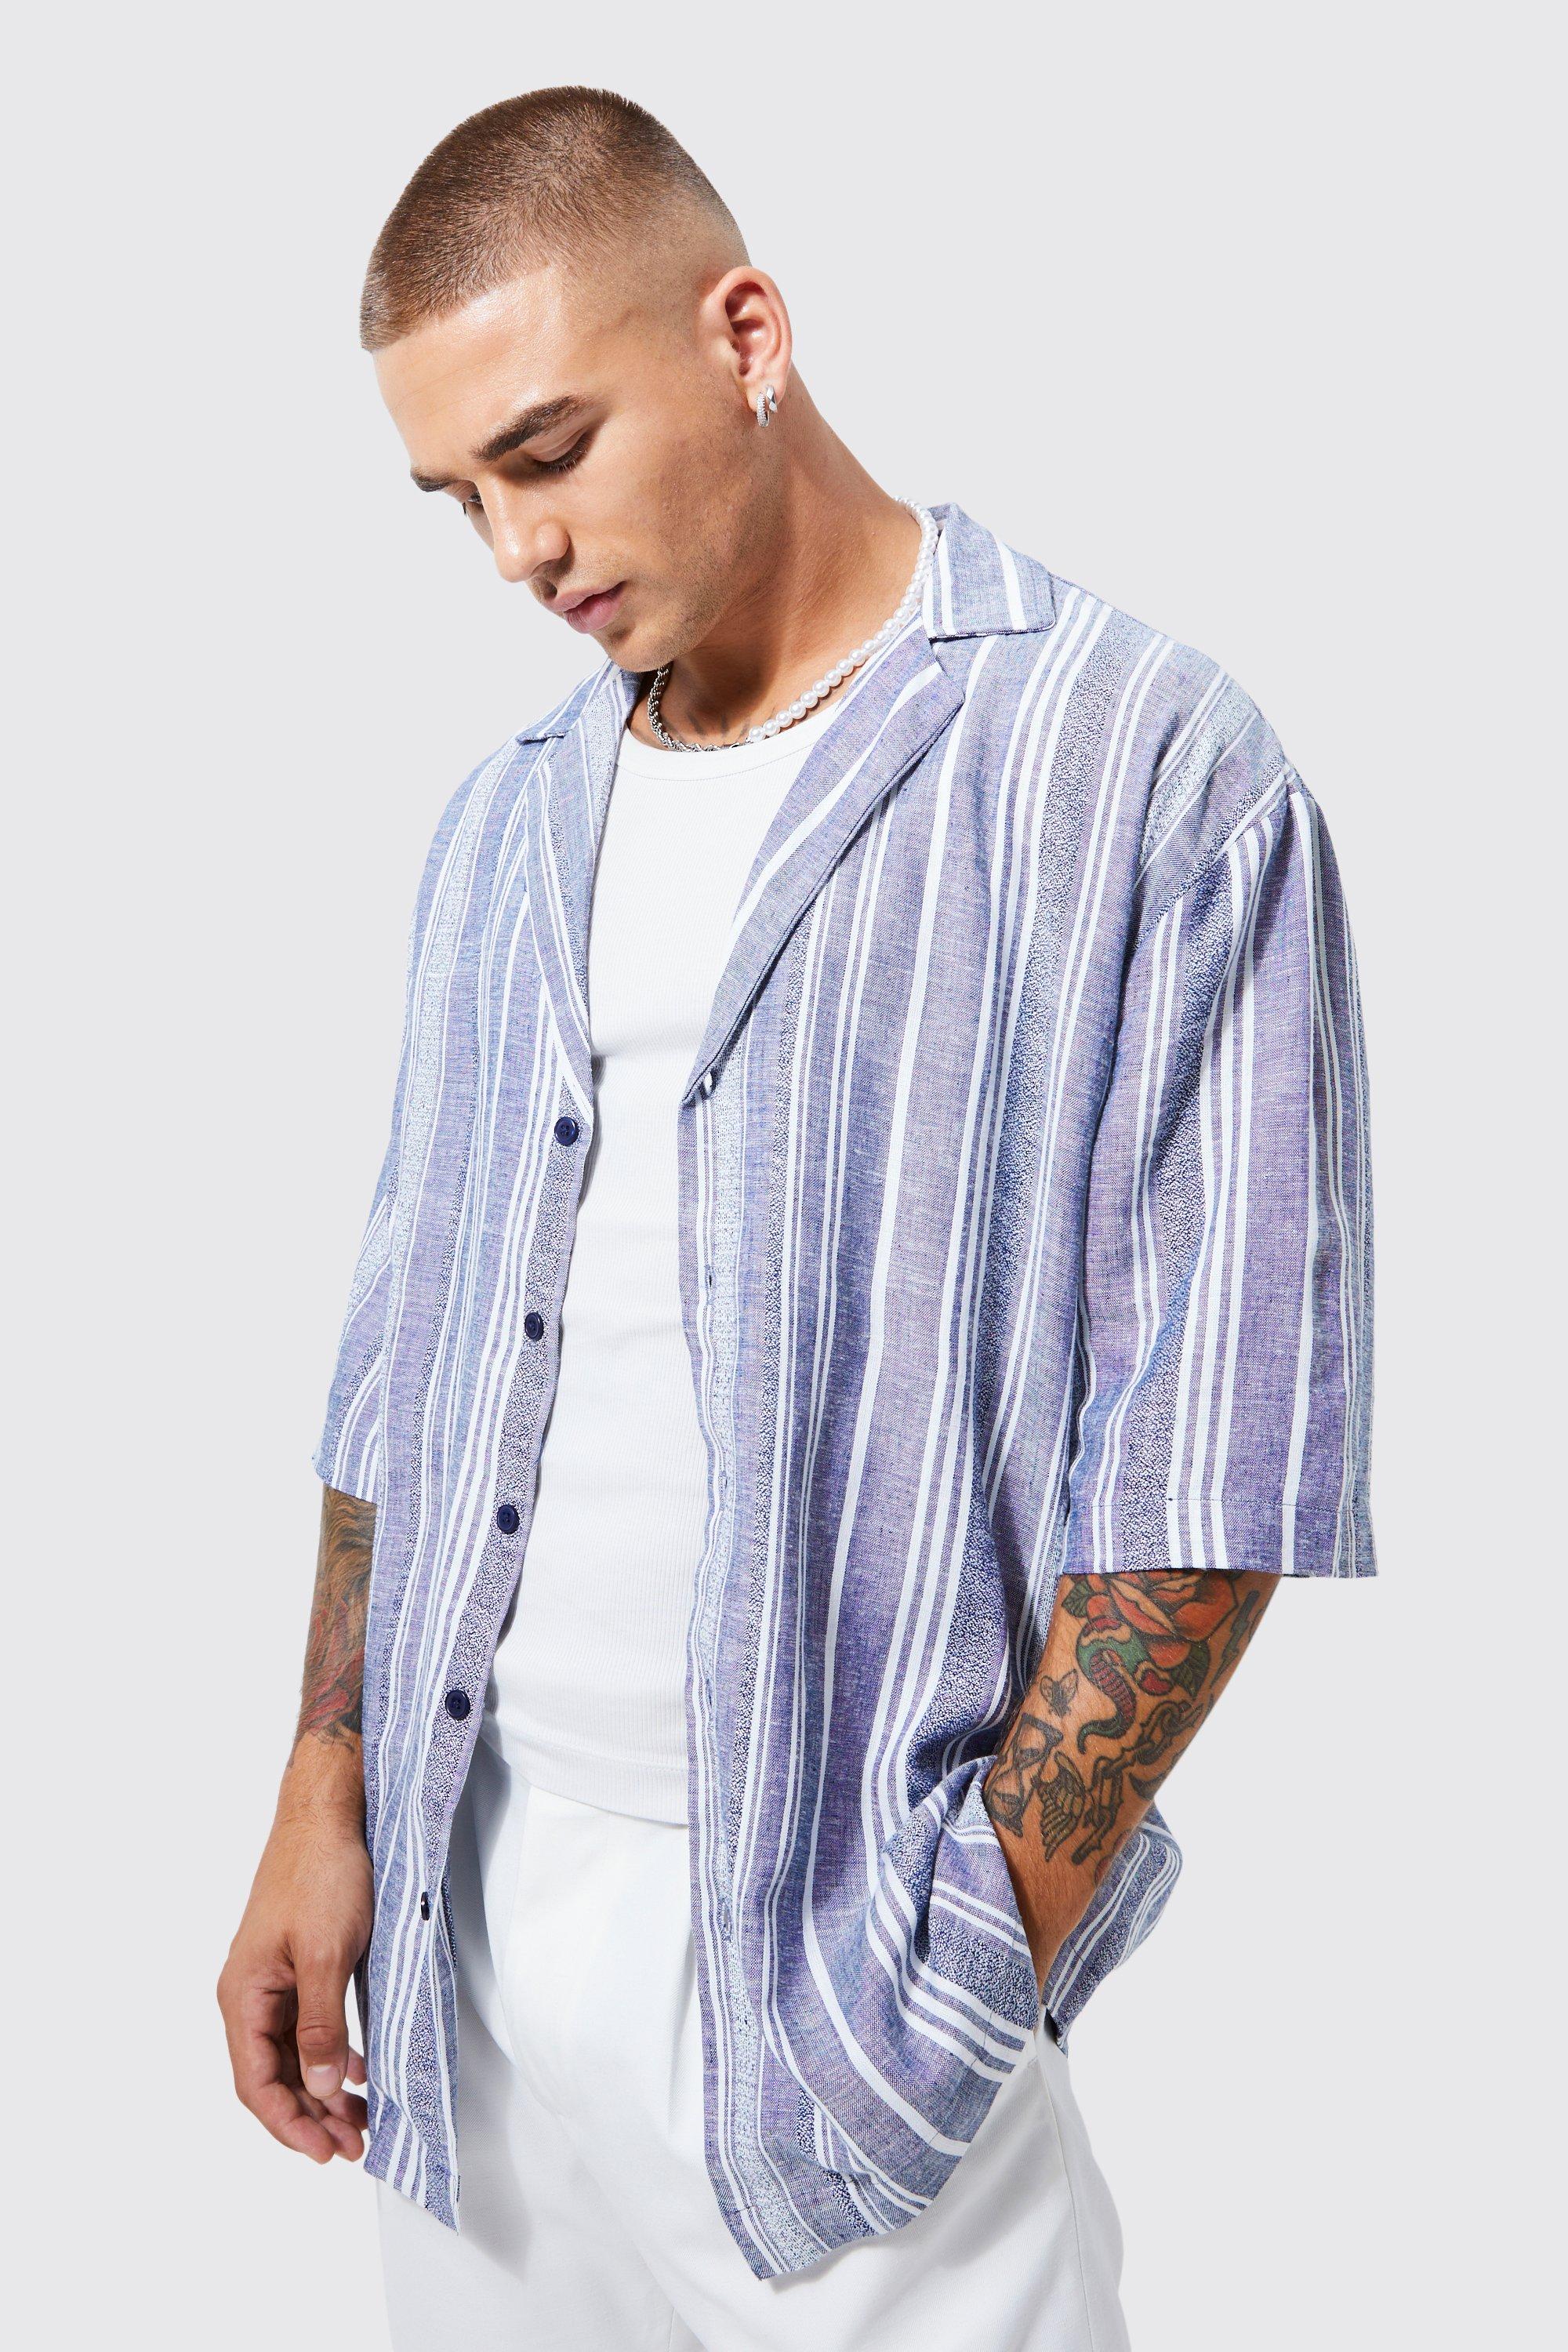 boohooMAN Men's Short Sleeve Revere Textured Shirt